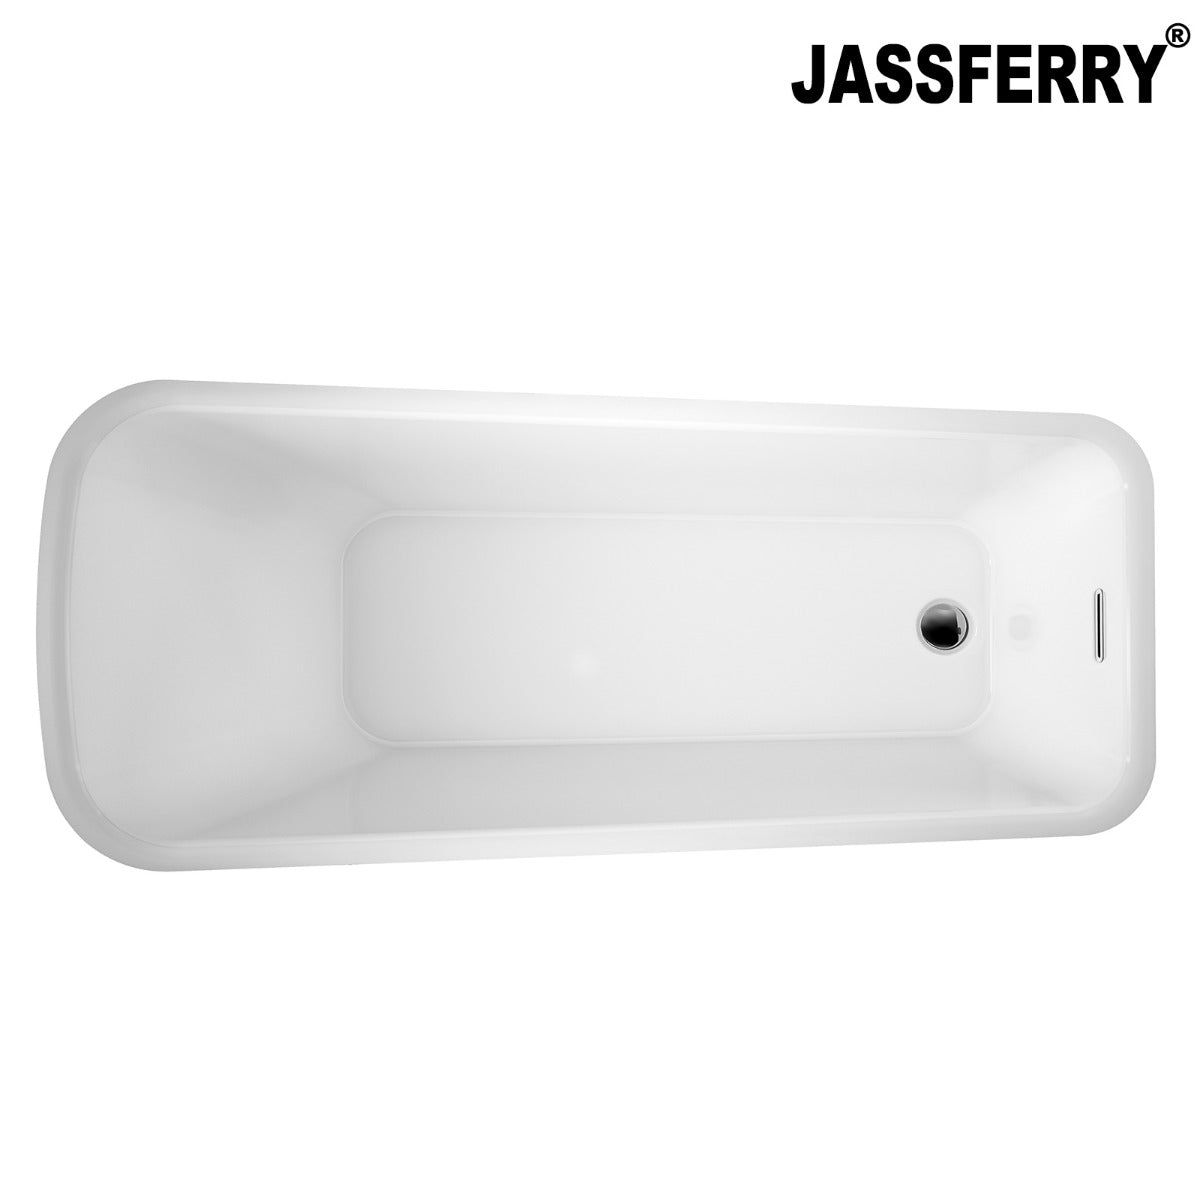 JassferryJASSFERRY Modern Design Rectangular Freestanding Bathtub Soaking BathsBathtubs